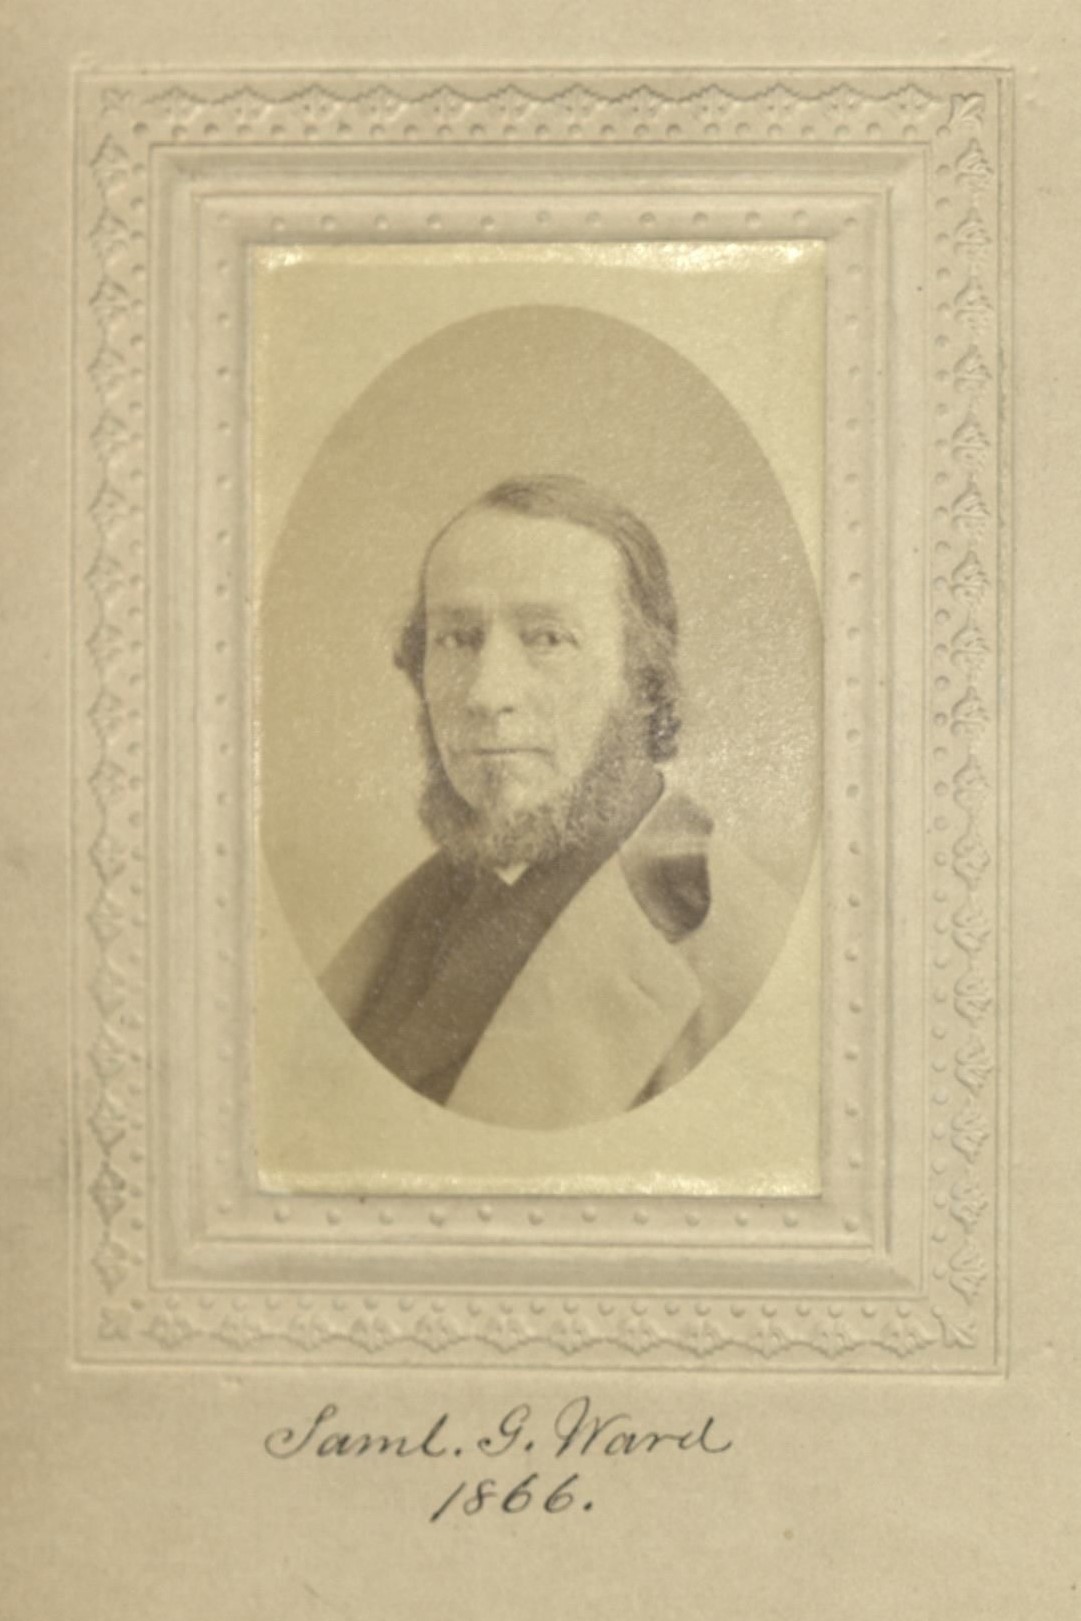 Member portrait of Samuel G. Ward